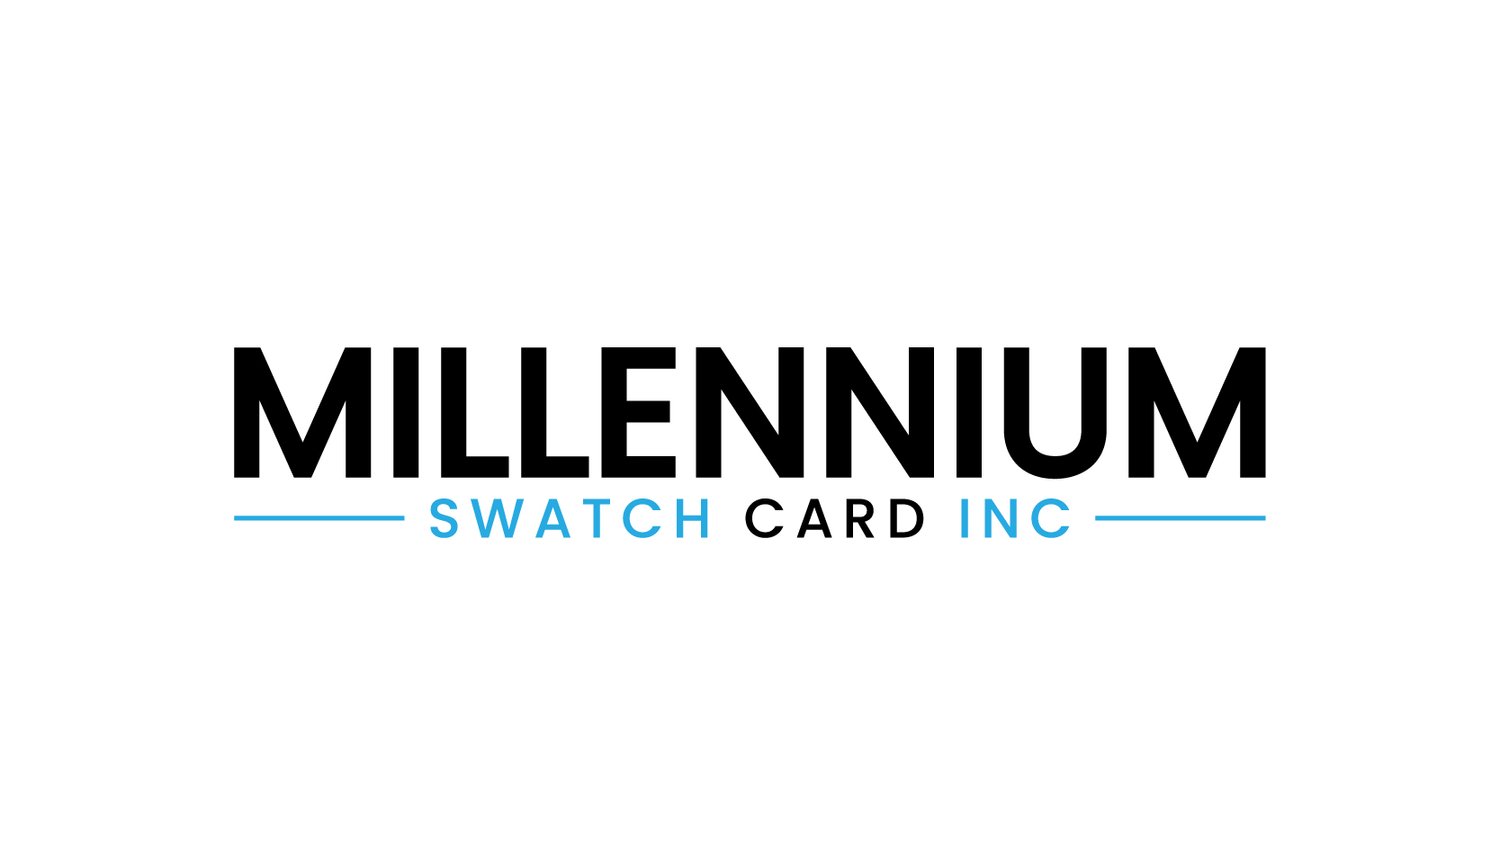 Millennium Swatch Card Inc